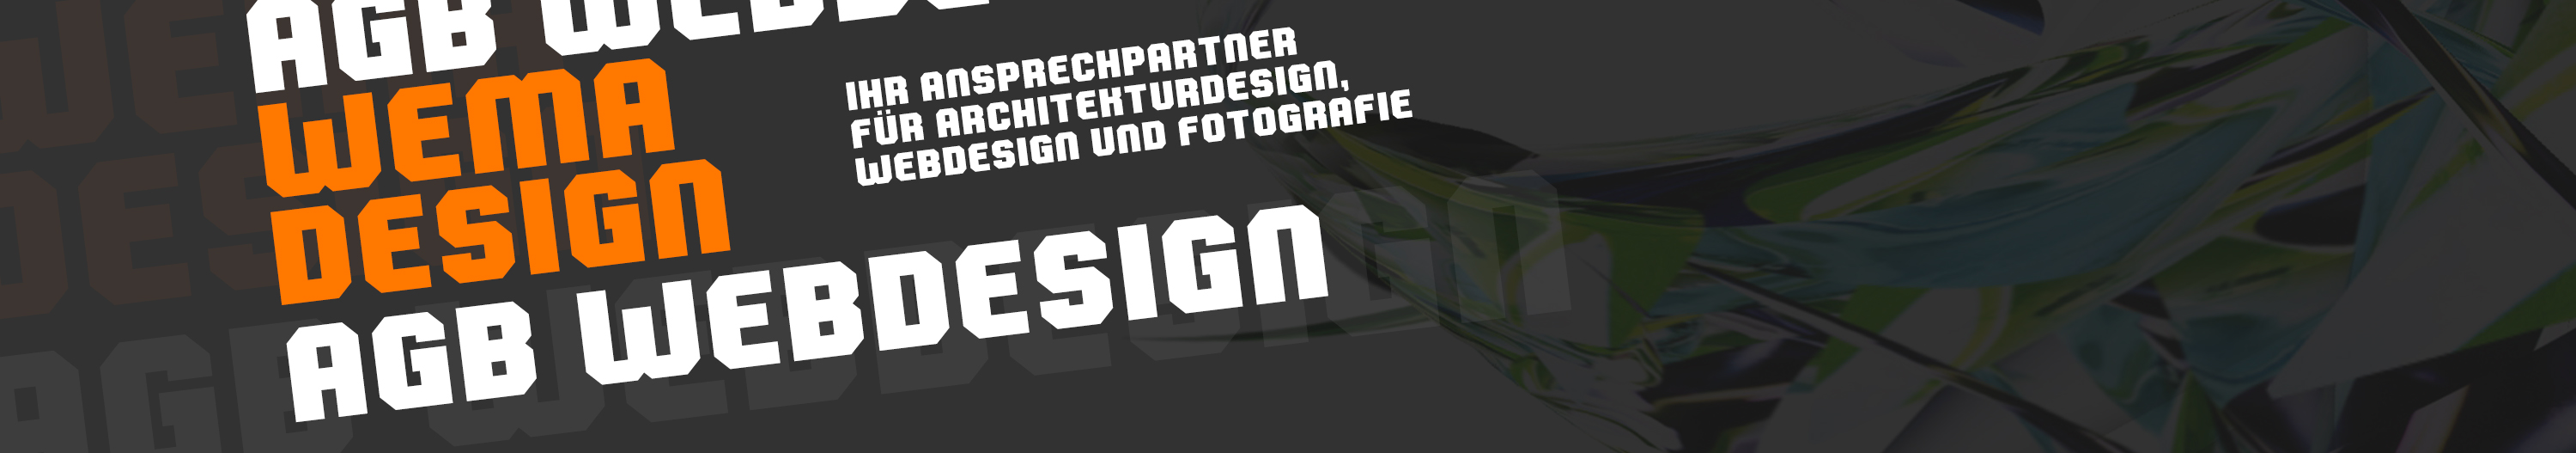 agb-webdesign-header